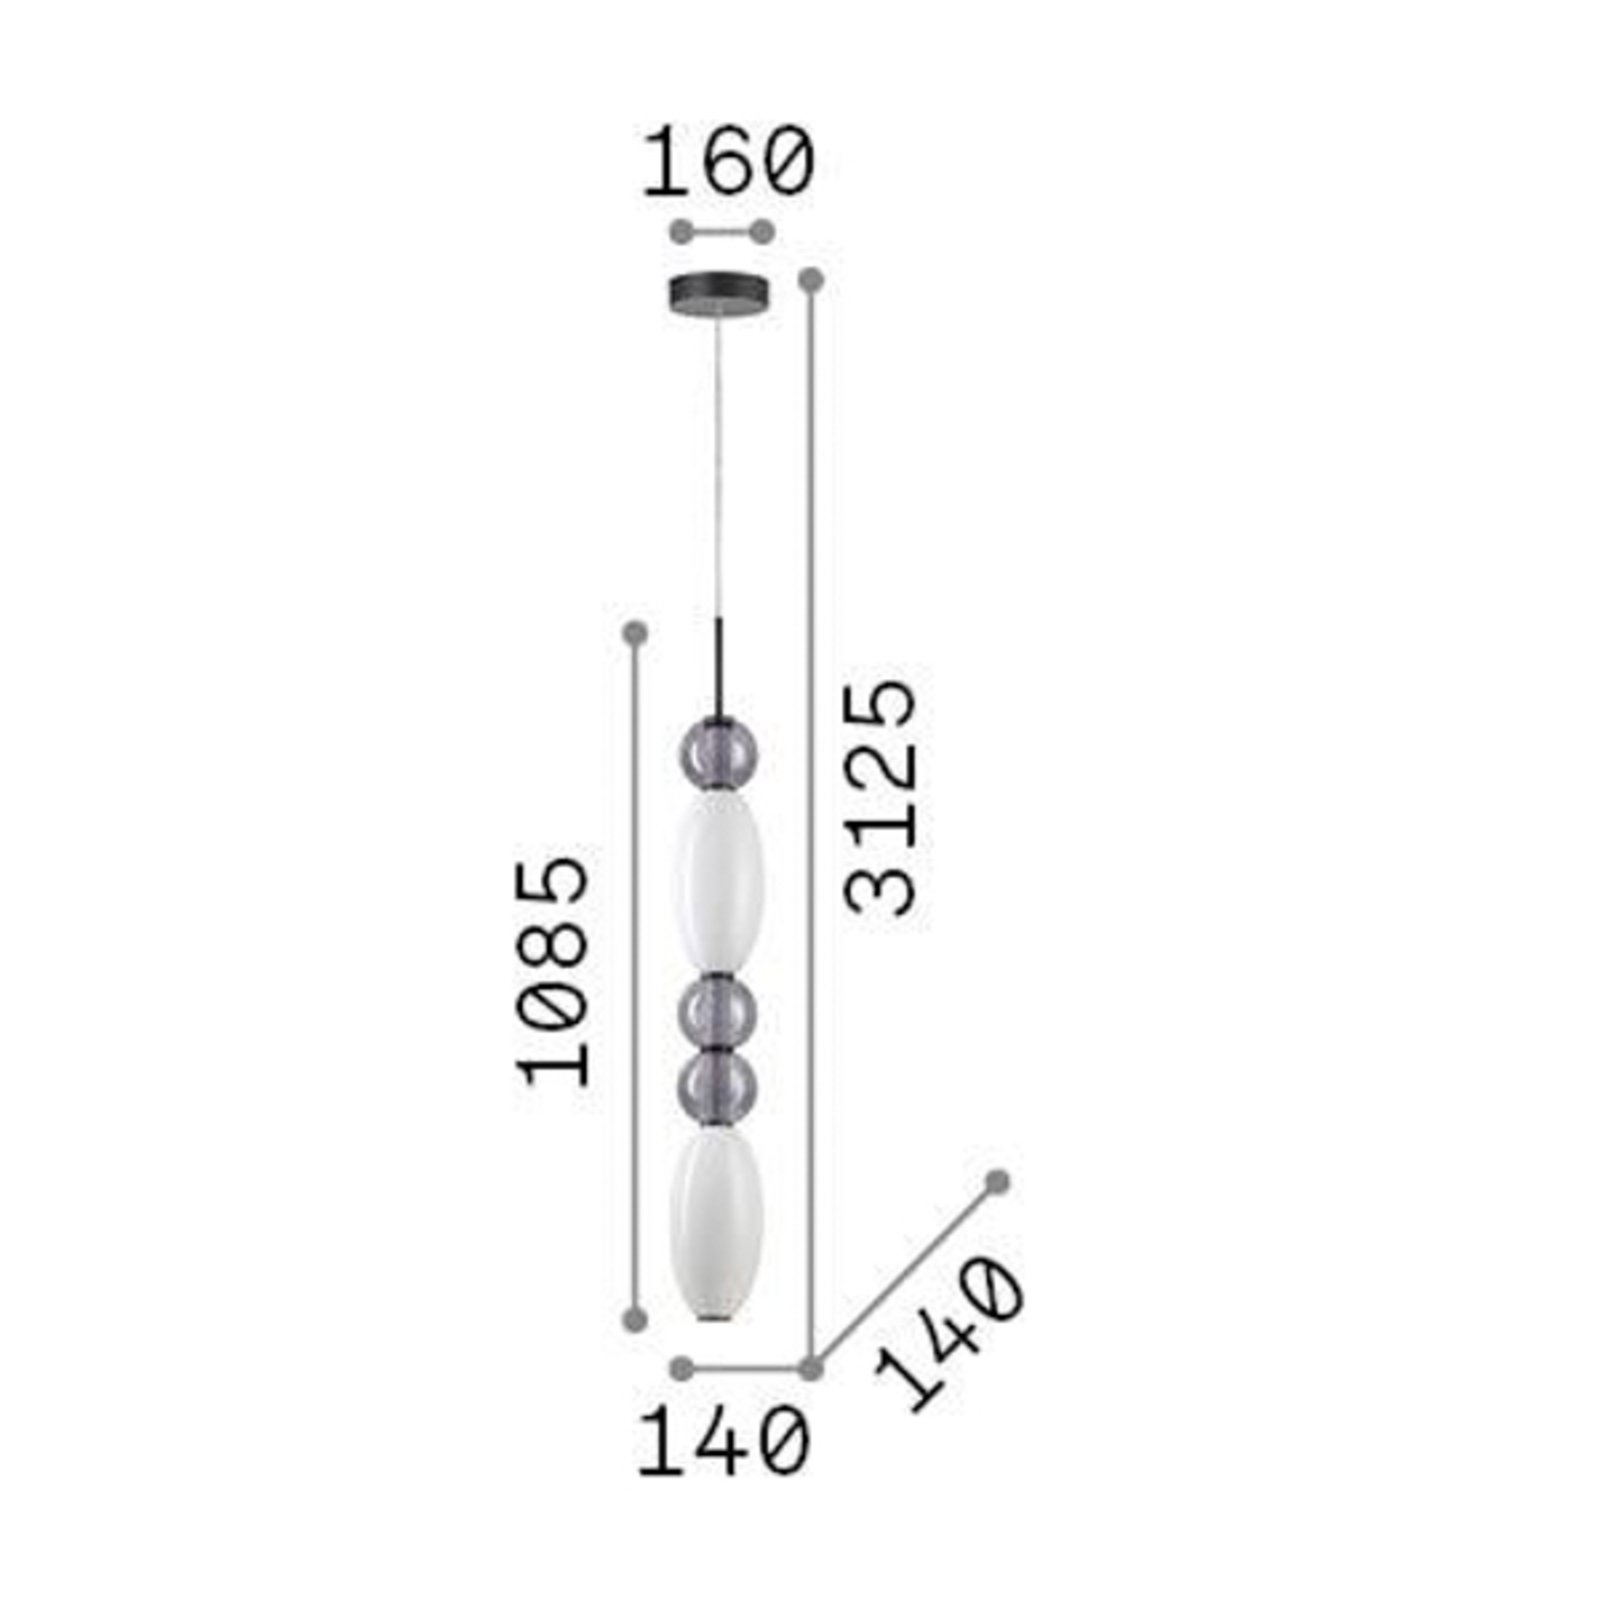 Ideal Lux LED viseče svetilo Lumiere-3, opalno/sivo steklo